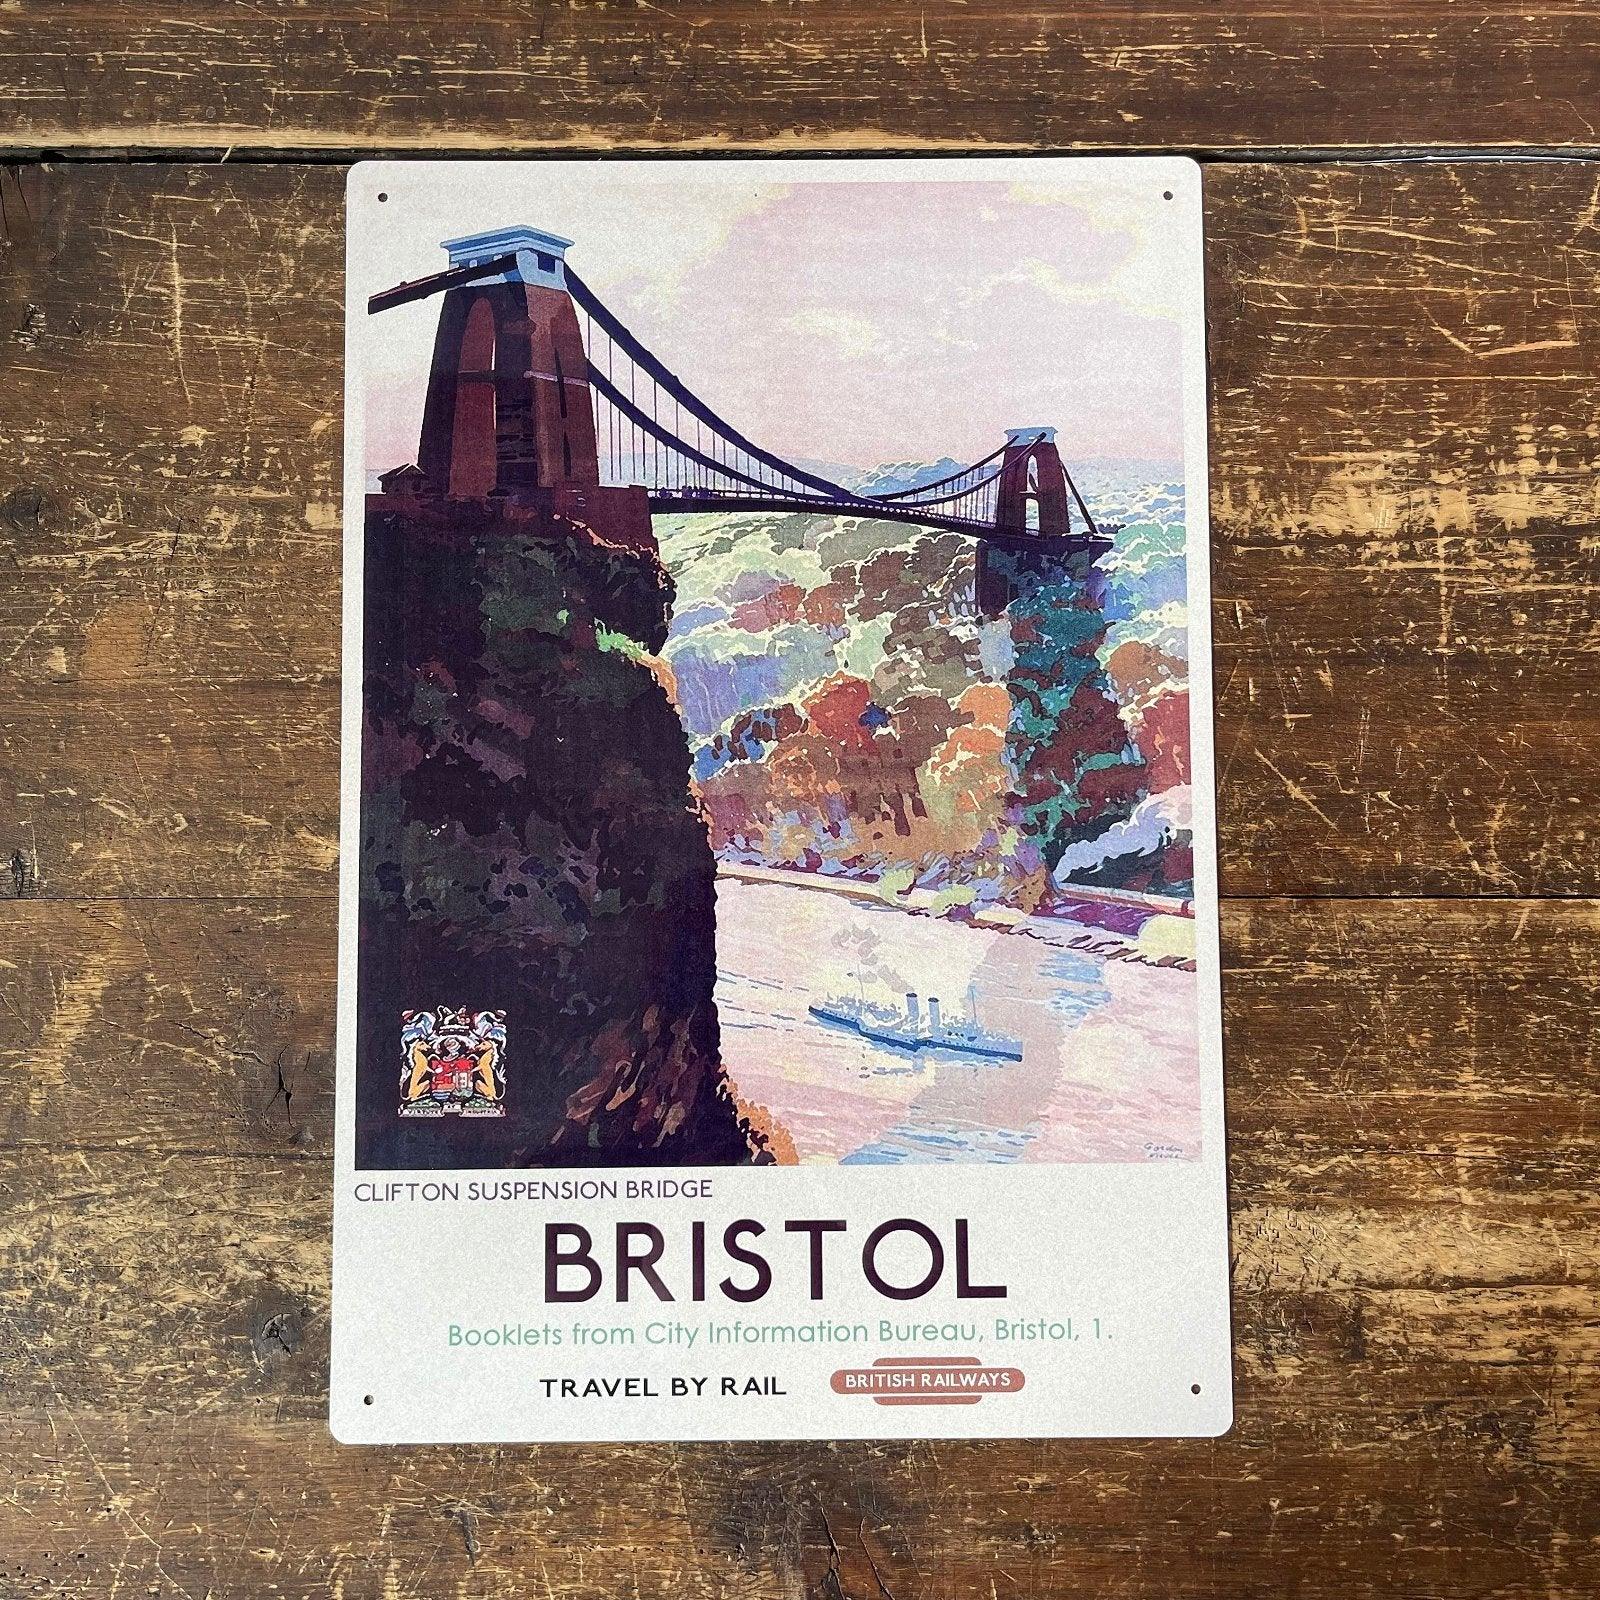 View Vintage Metal Sign British Railways Retro Advertising Bristol Clifton Suspension Bridge information